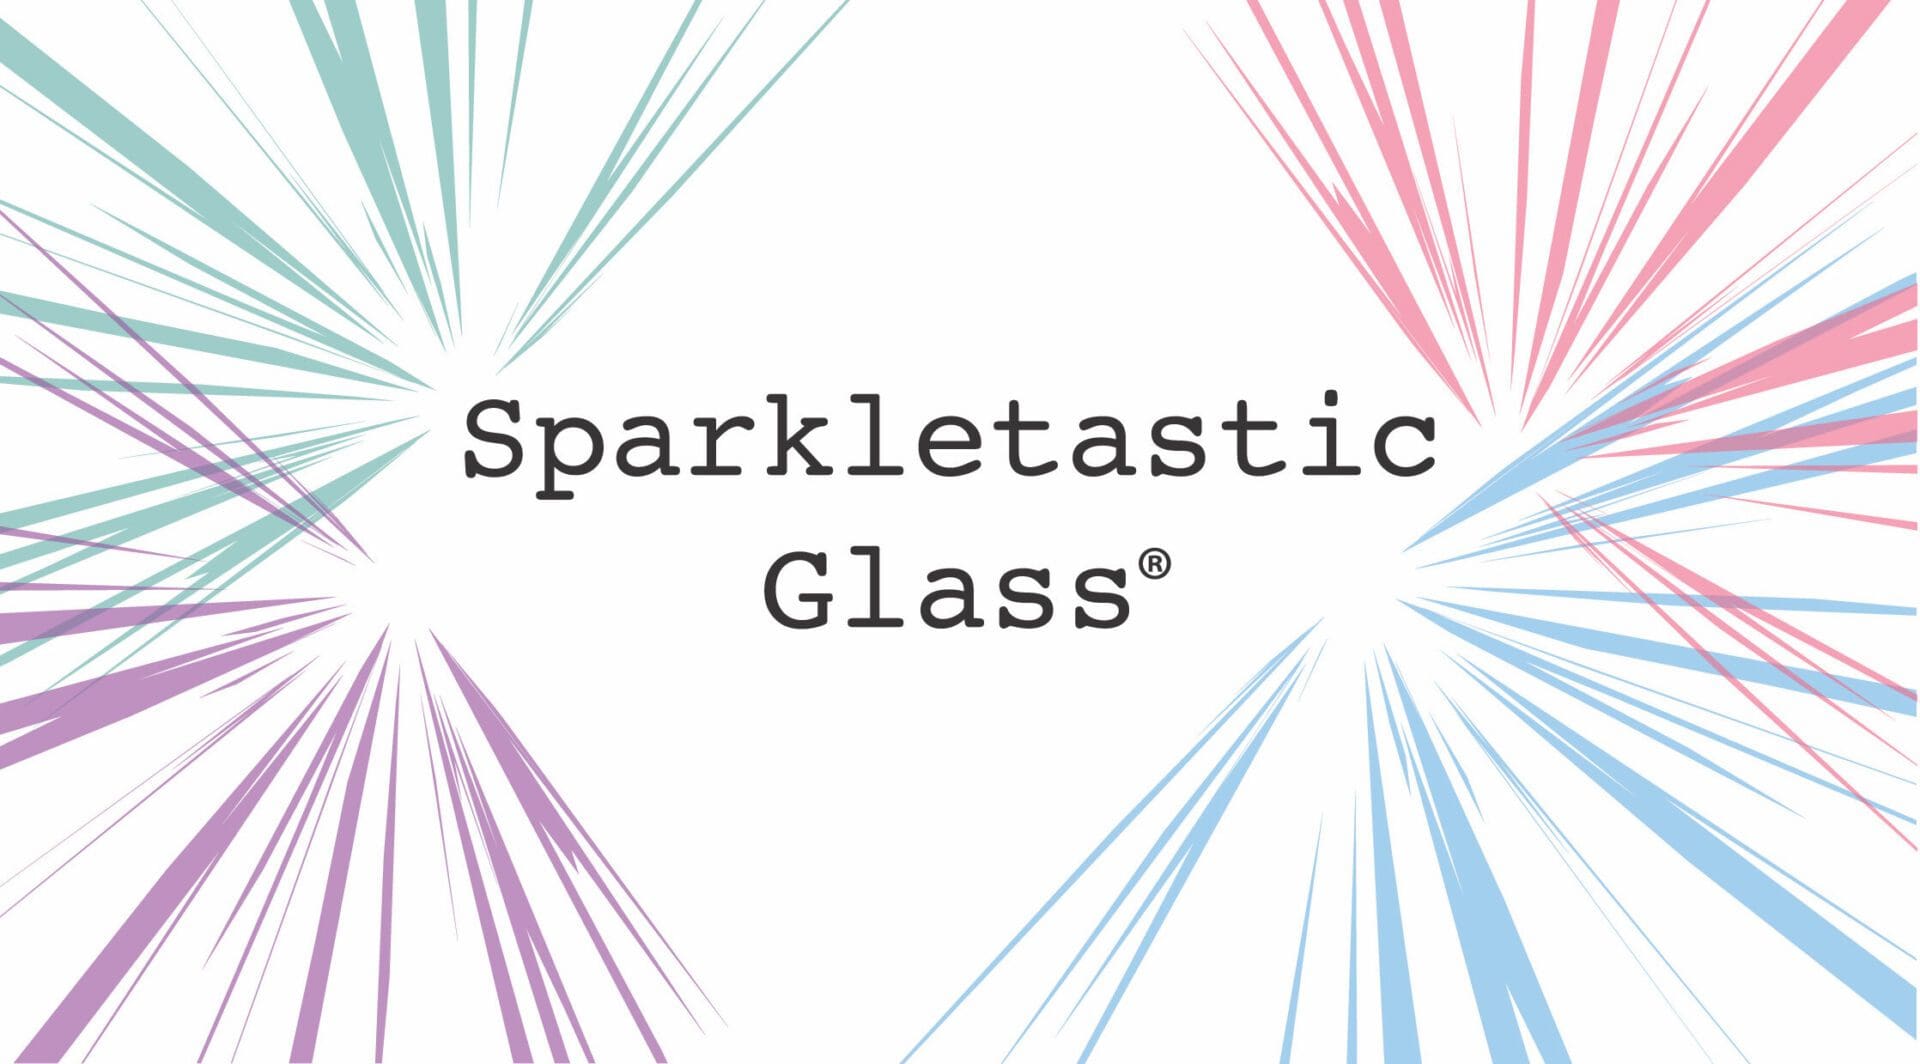 Sparkletastic Glass